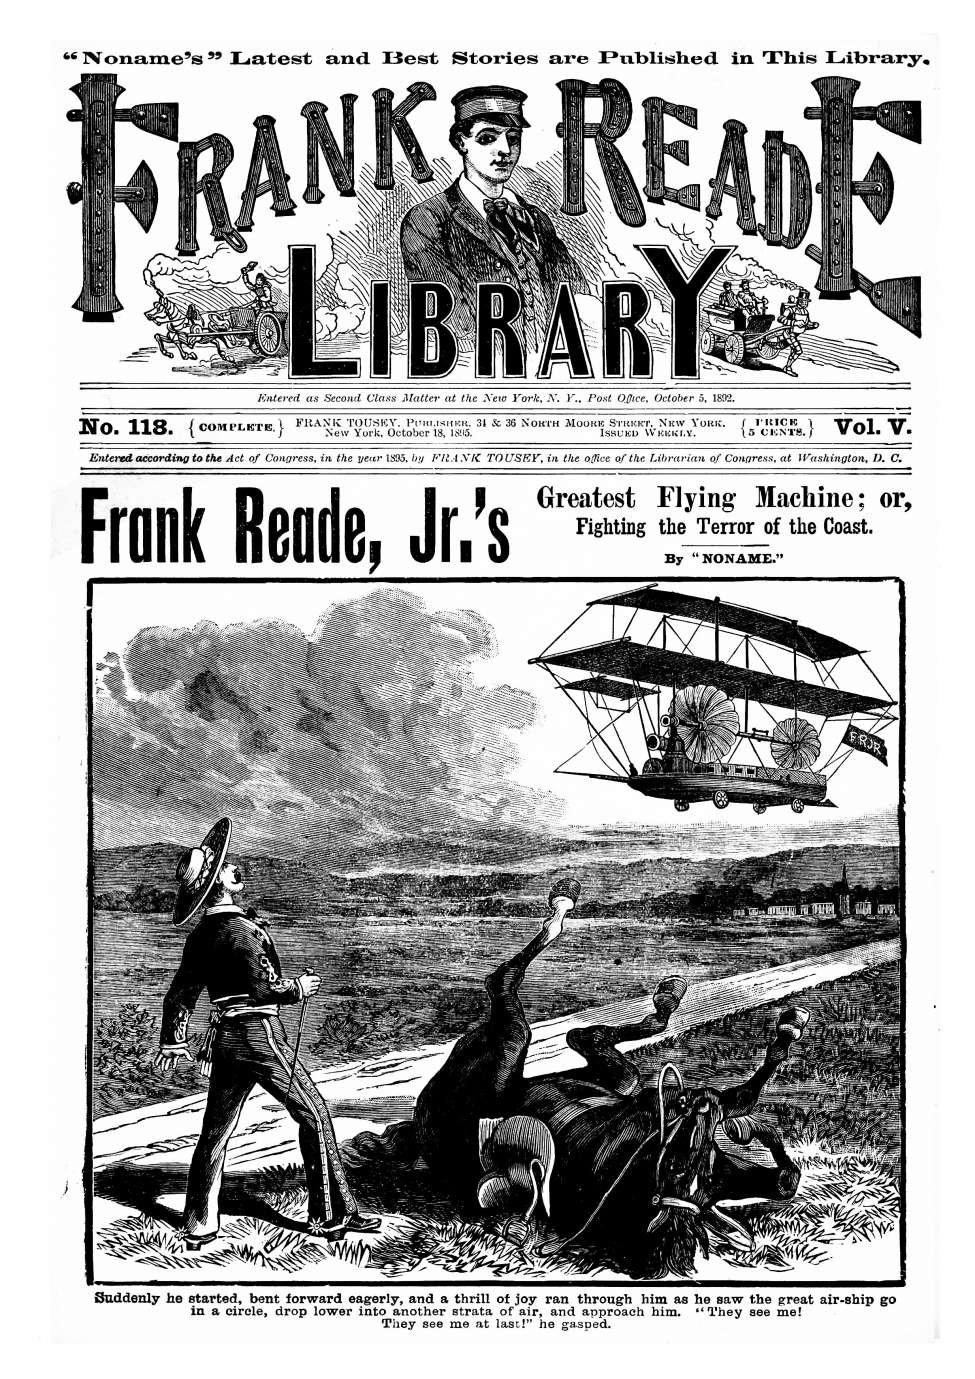 Comic Book Cover For v05 118 - Frank Reade, Jr.s Greatest Flying Machine